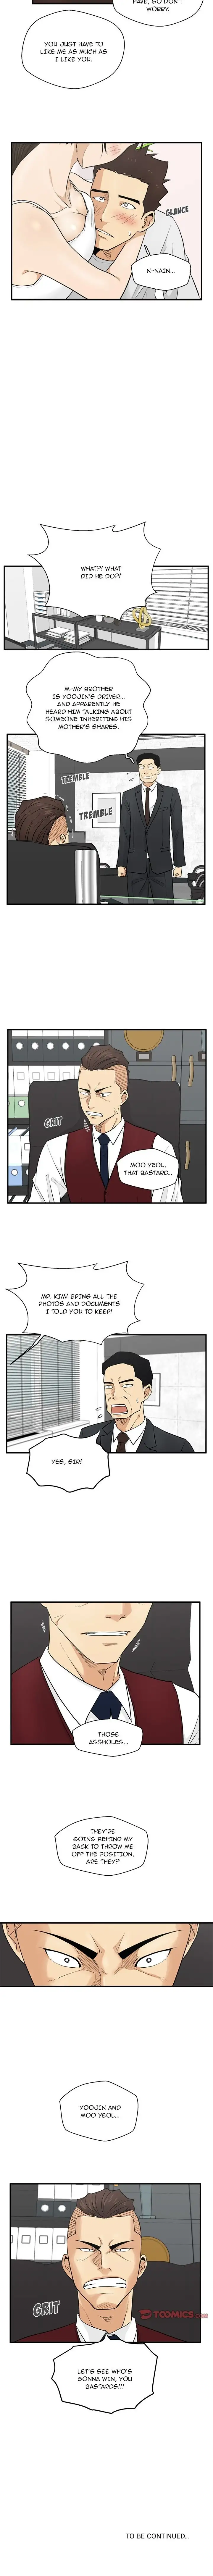 Mr. Kang - Chapter 54 Page 10